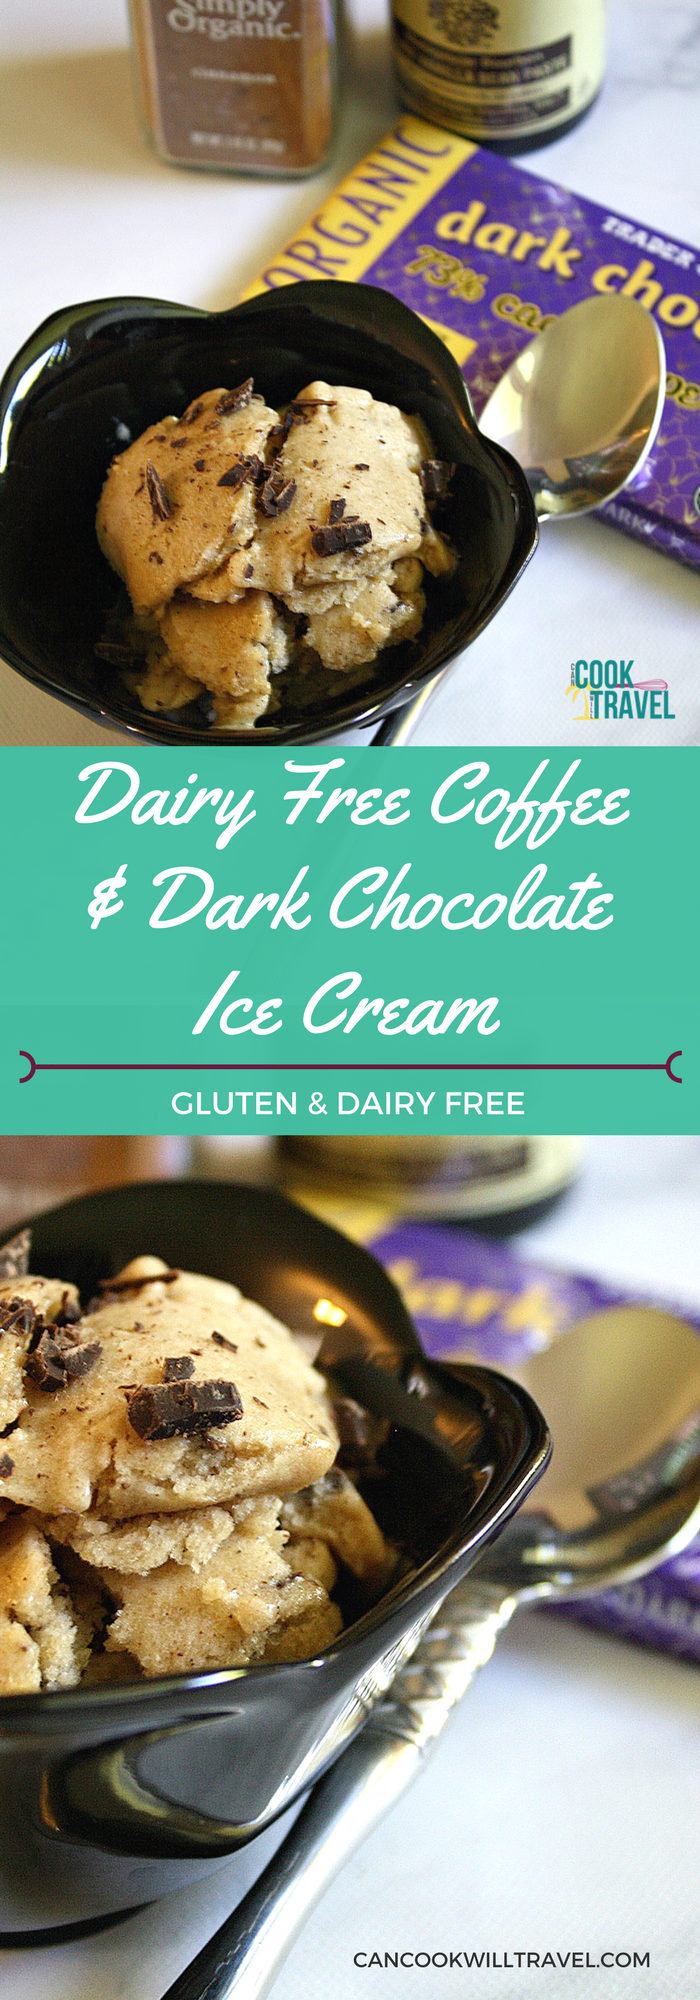 DF Coffee & Dark Chocolate Ice Cream_Collage1 (1)